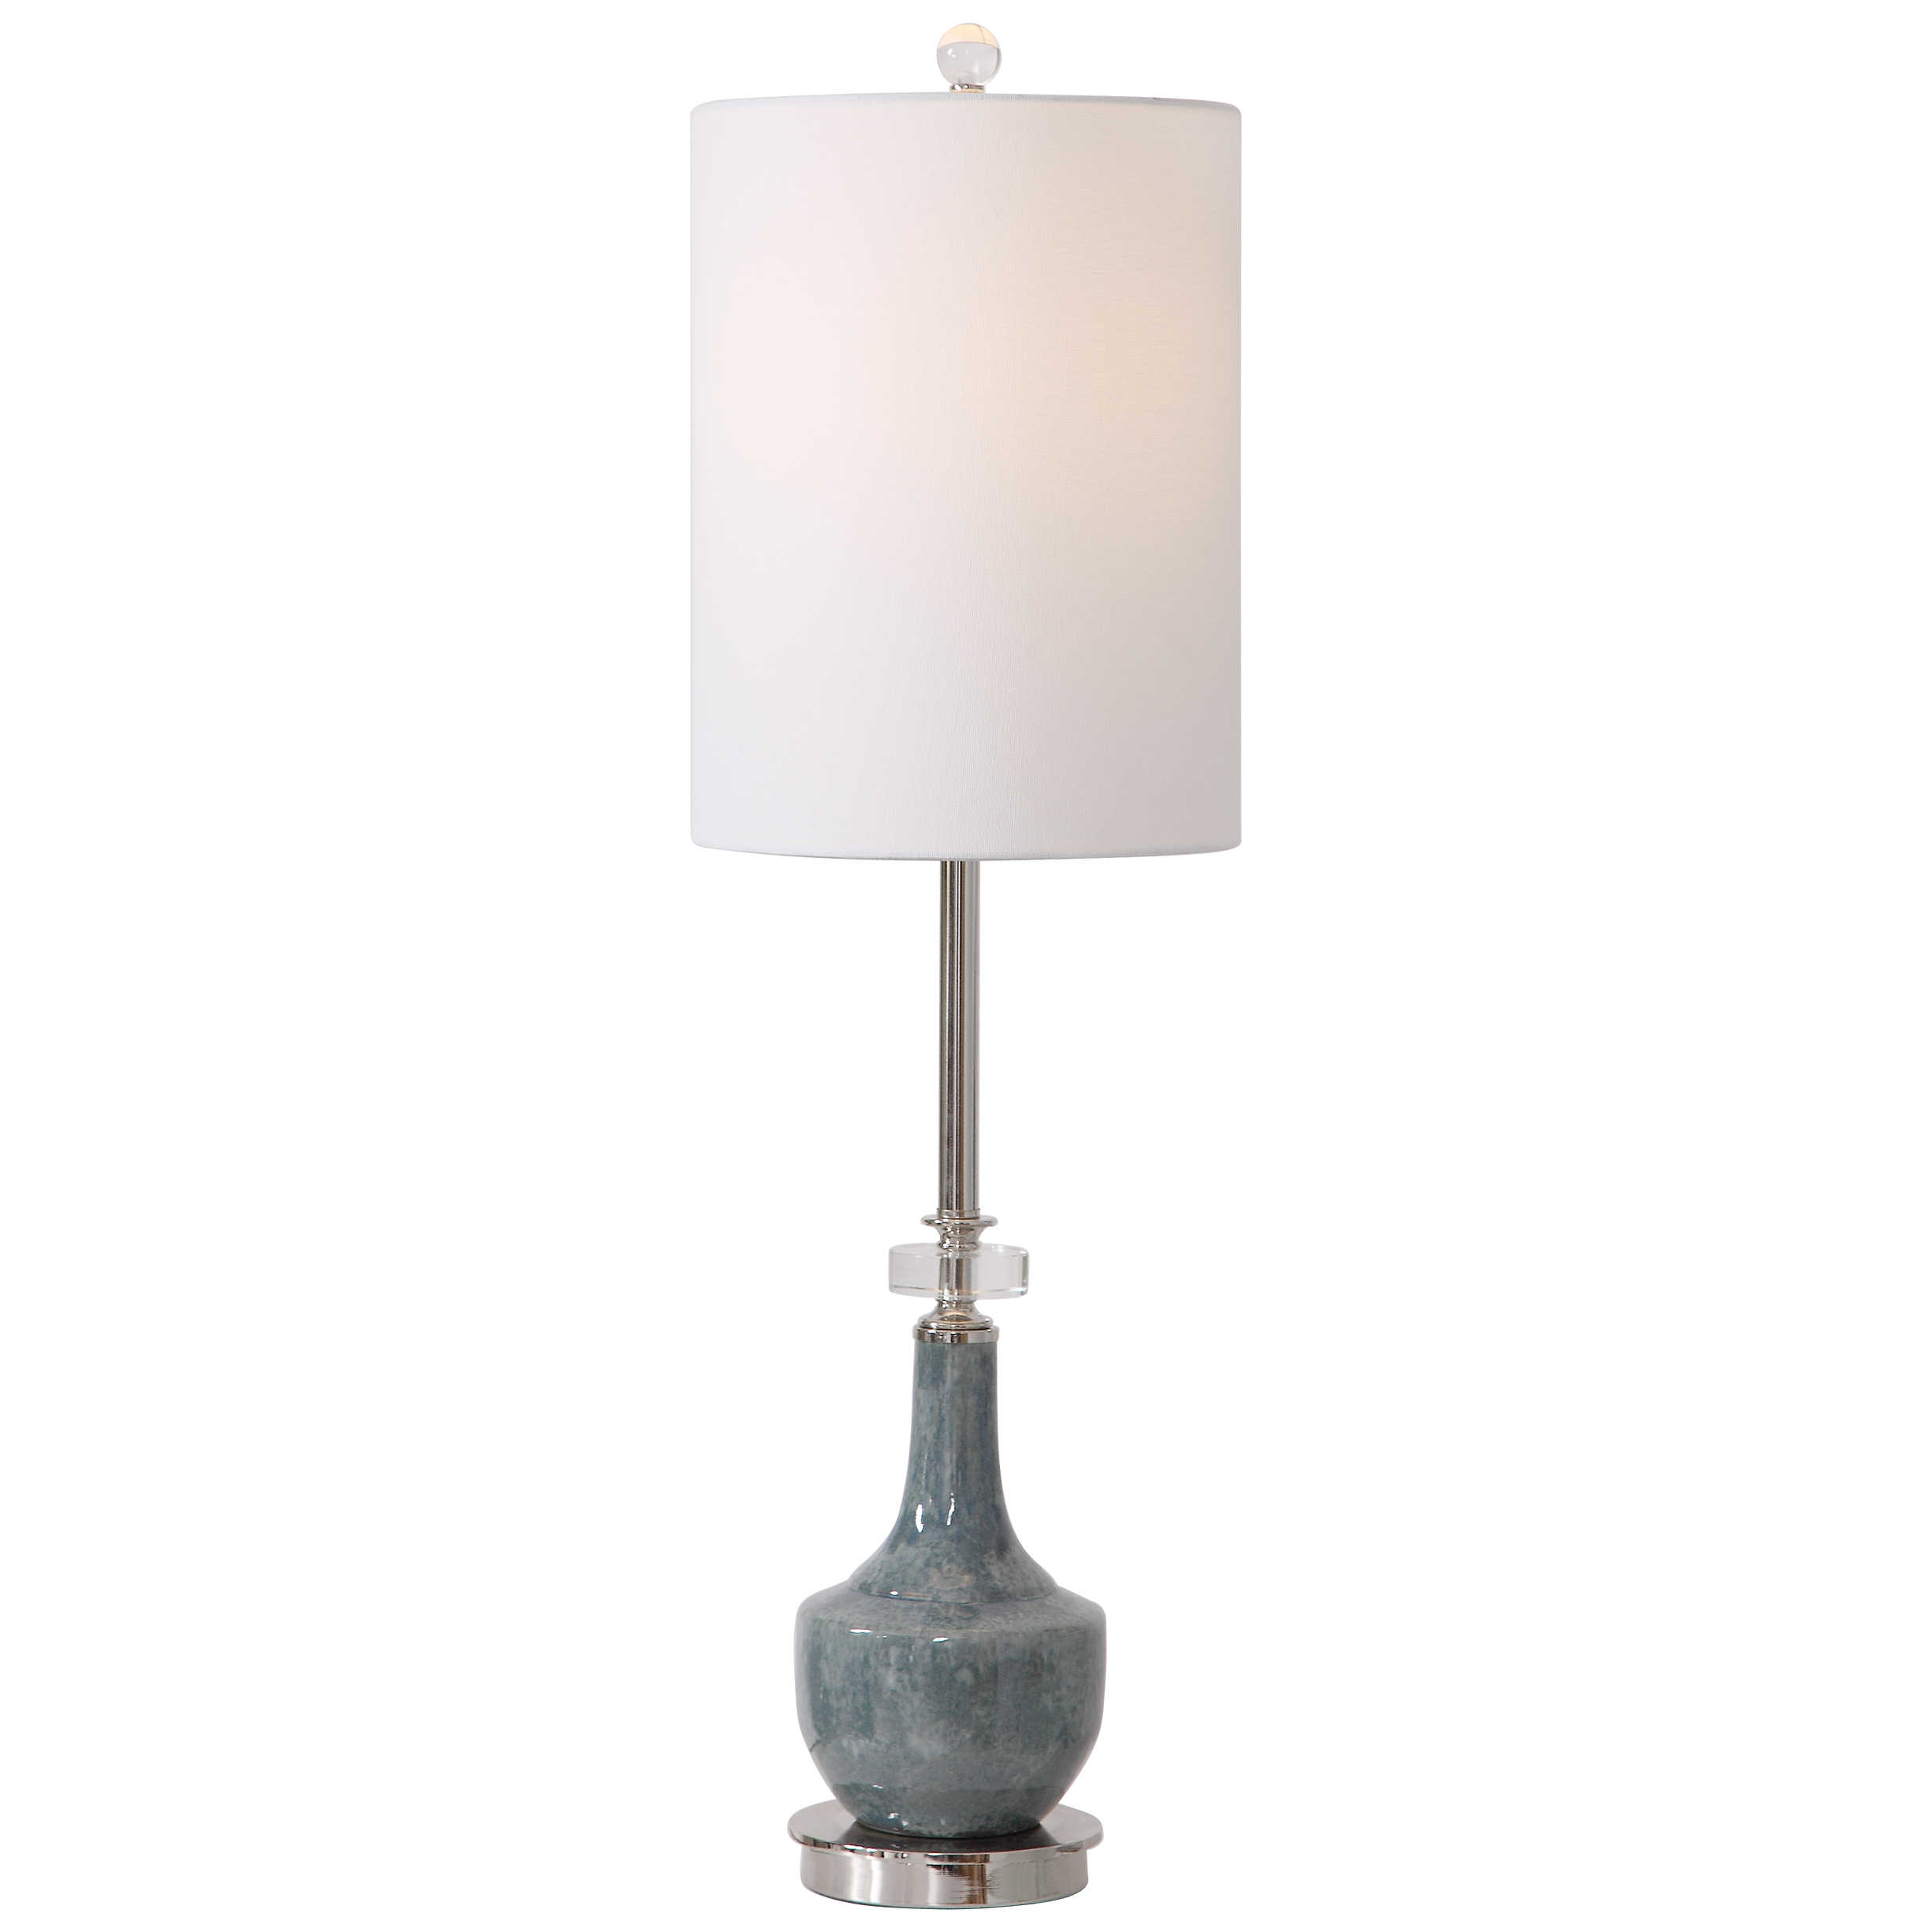 Лампа PIERS BUFFET LAMP 29698-1 Uttermost США